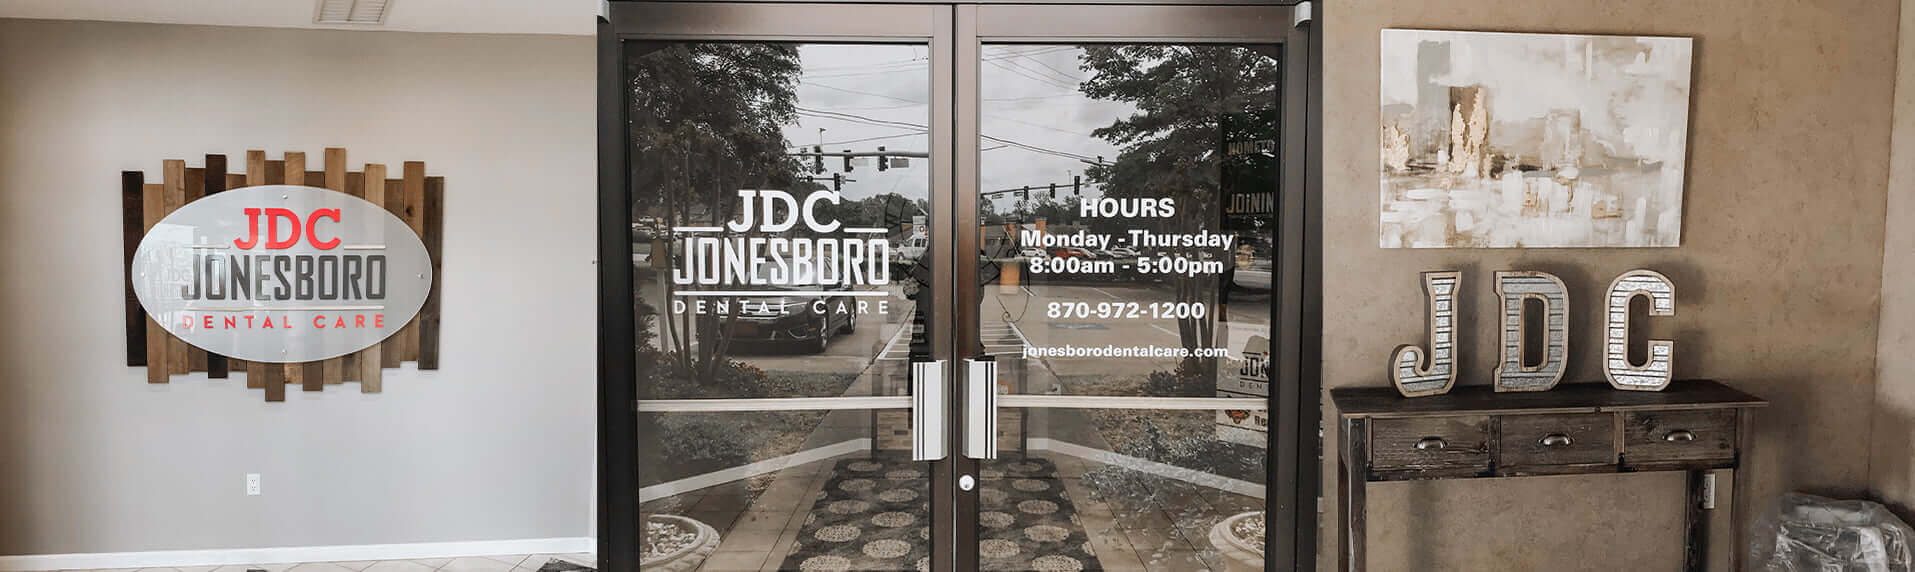 Jonesbor Dental Care entrance